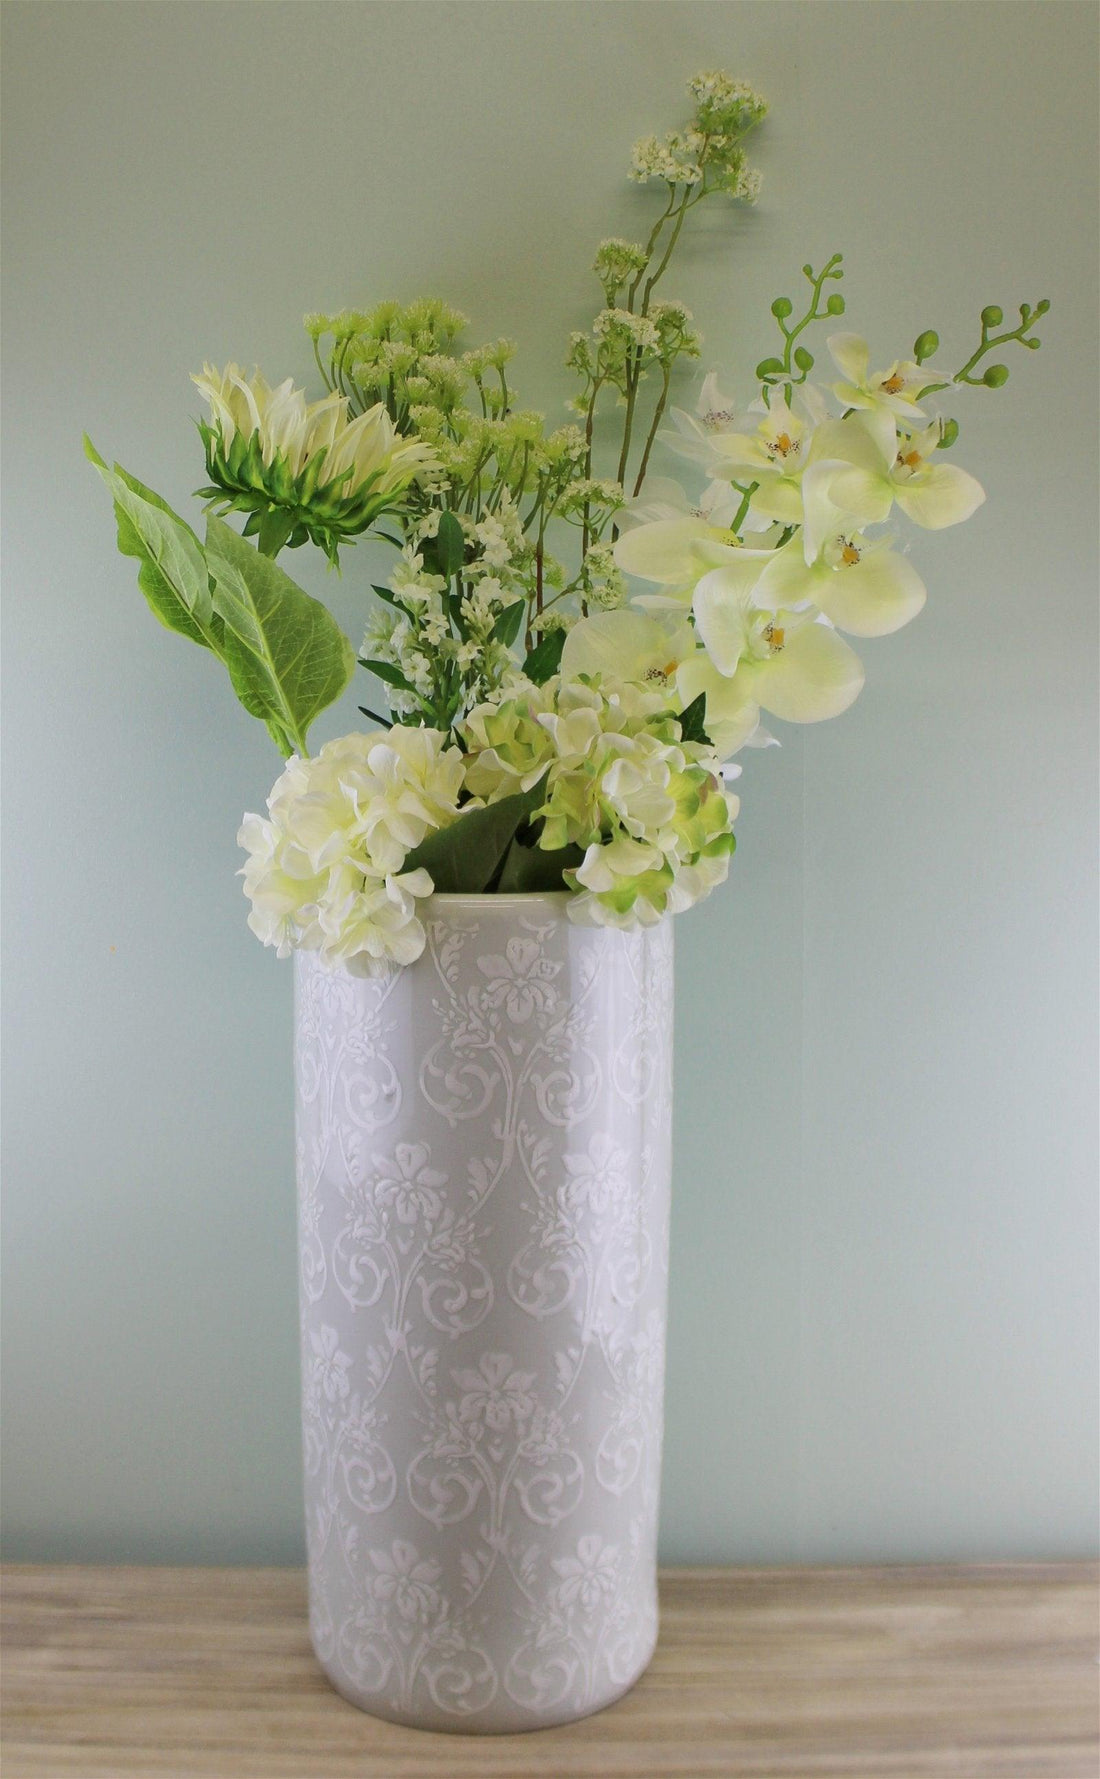 Single Orchid Spray, White Flowers, 85cm - £12.99 - Flower Sprays 